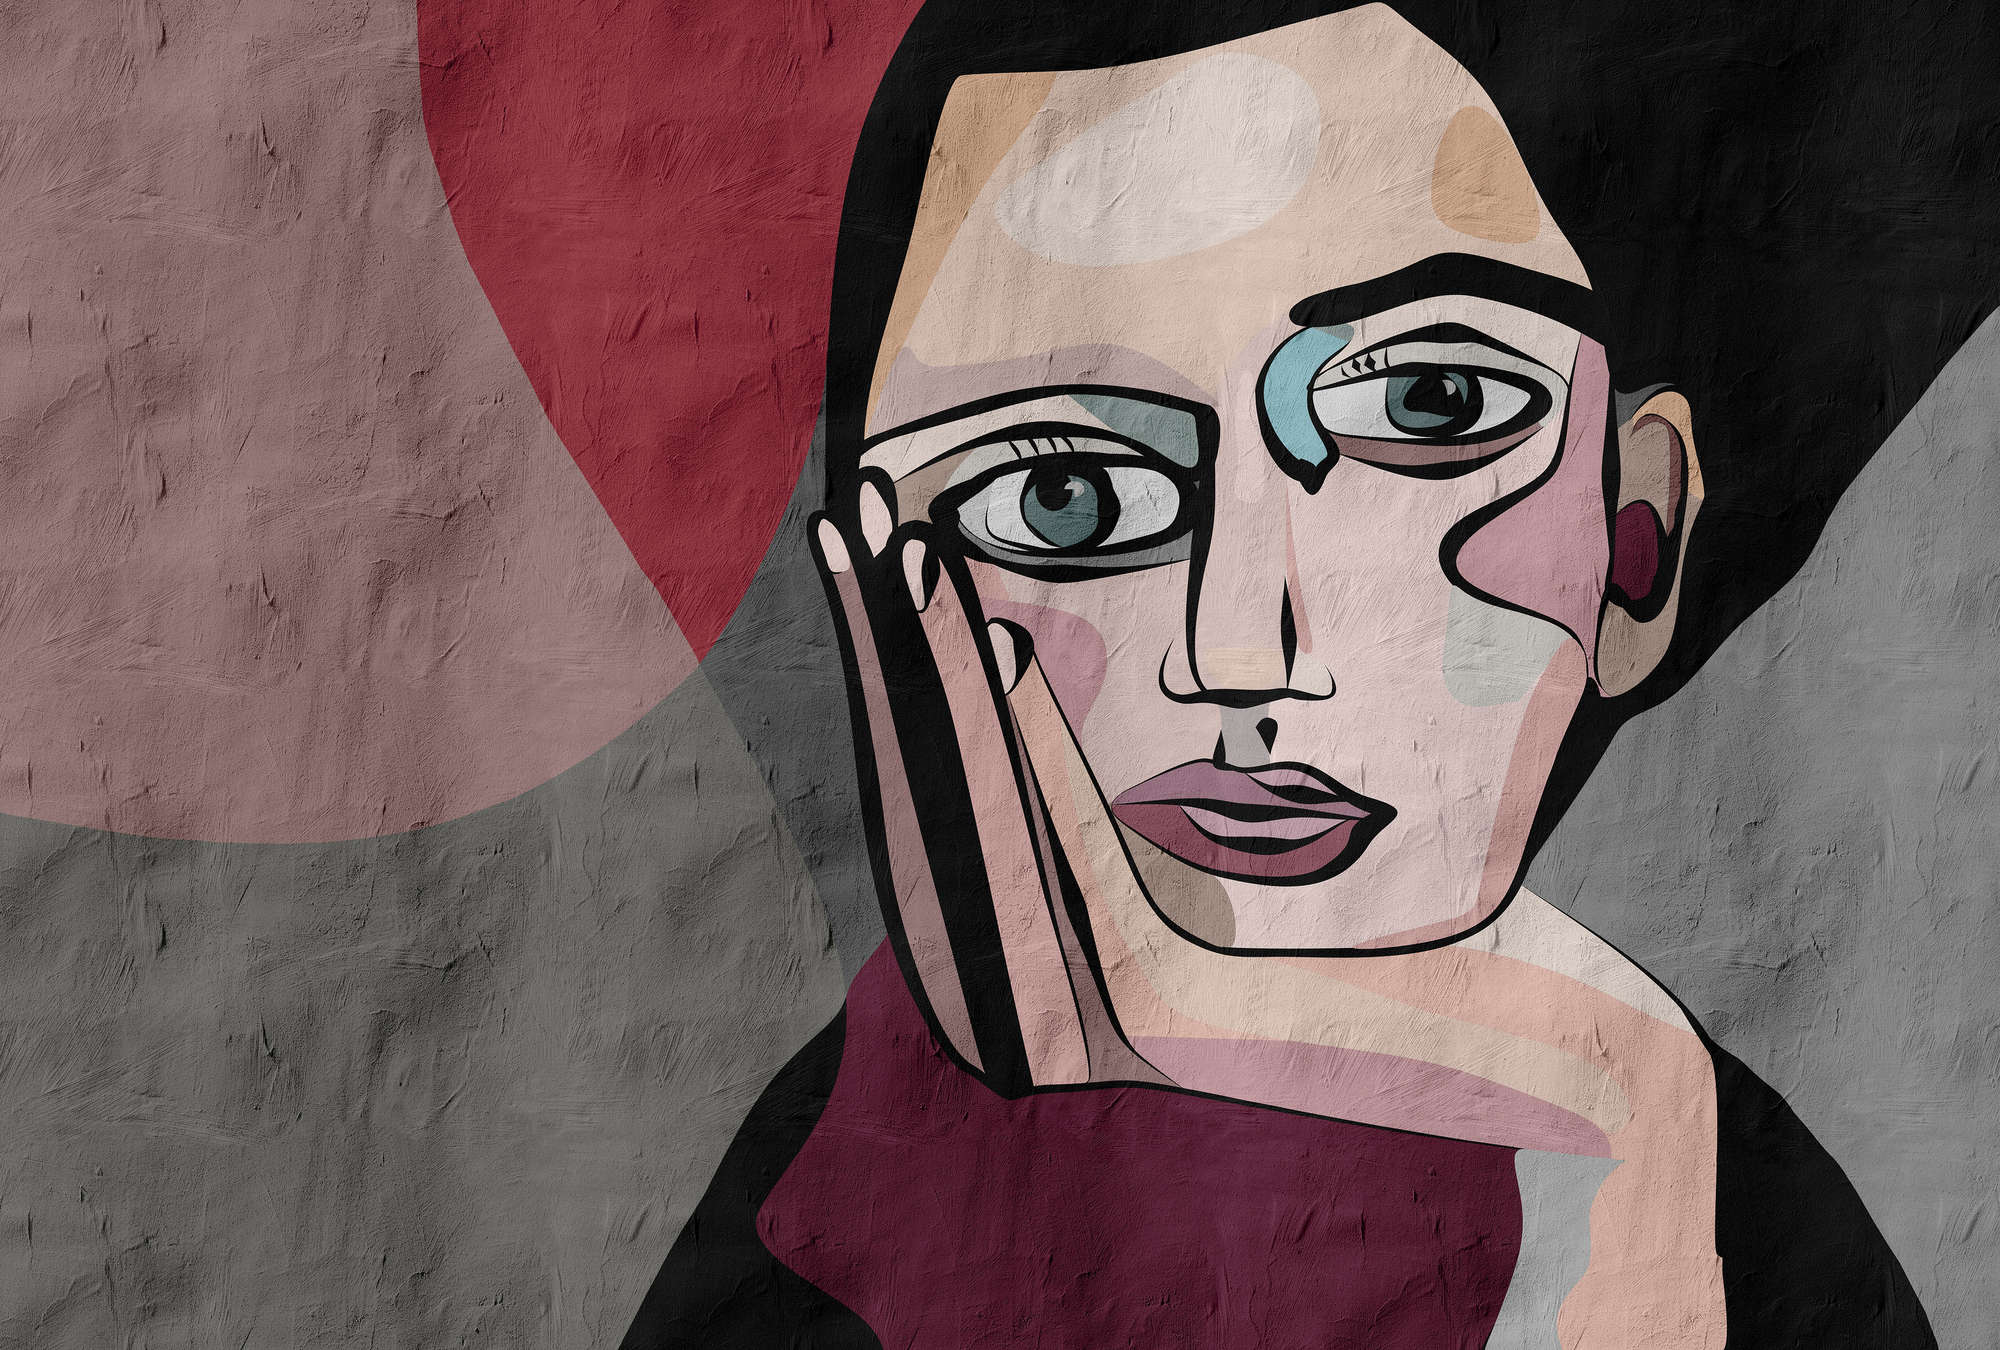             Think Tank 1 - papel pintado abstracto con cara de mujer
        